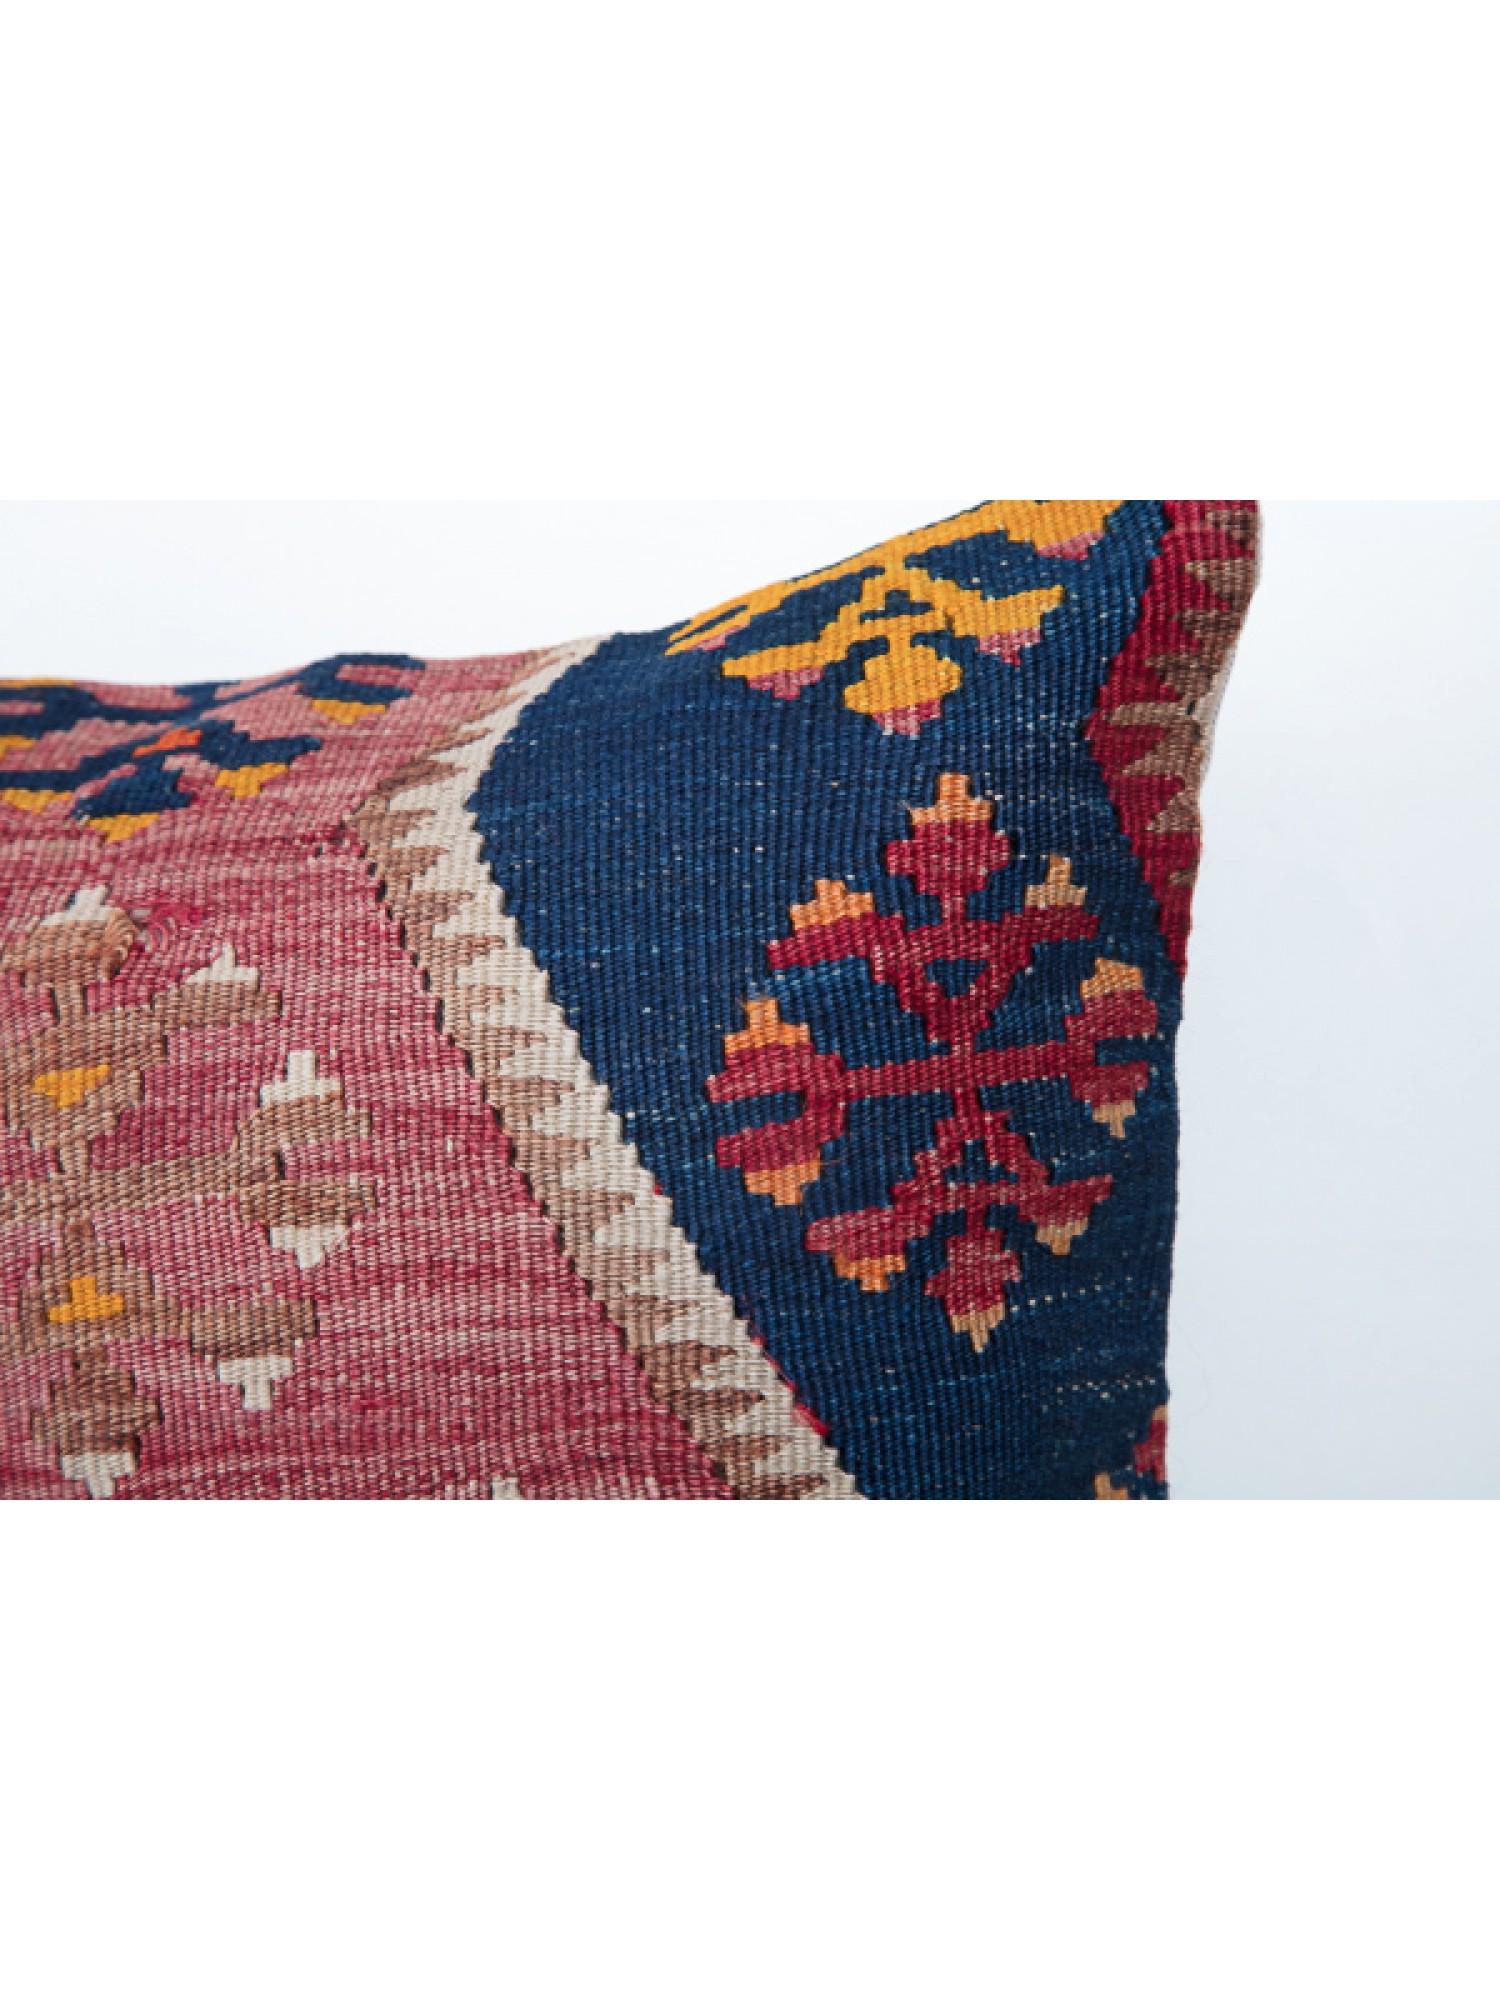 Hand-Woven Antique & Old Kilim Cushion Cover, Anatolian Yastik Turkish Modern Pillow KC3504 For Sale